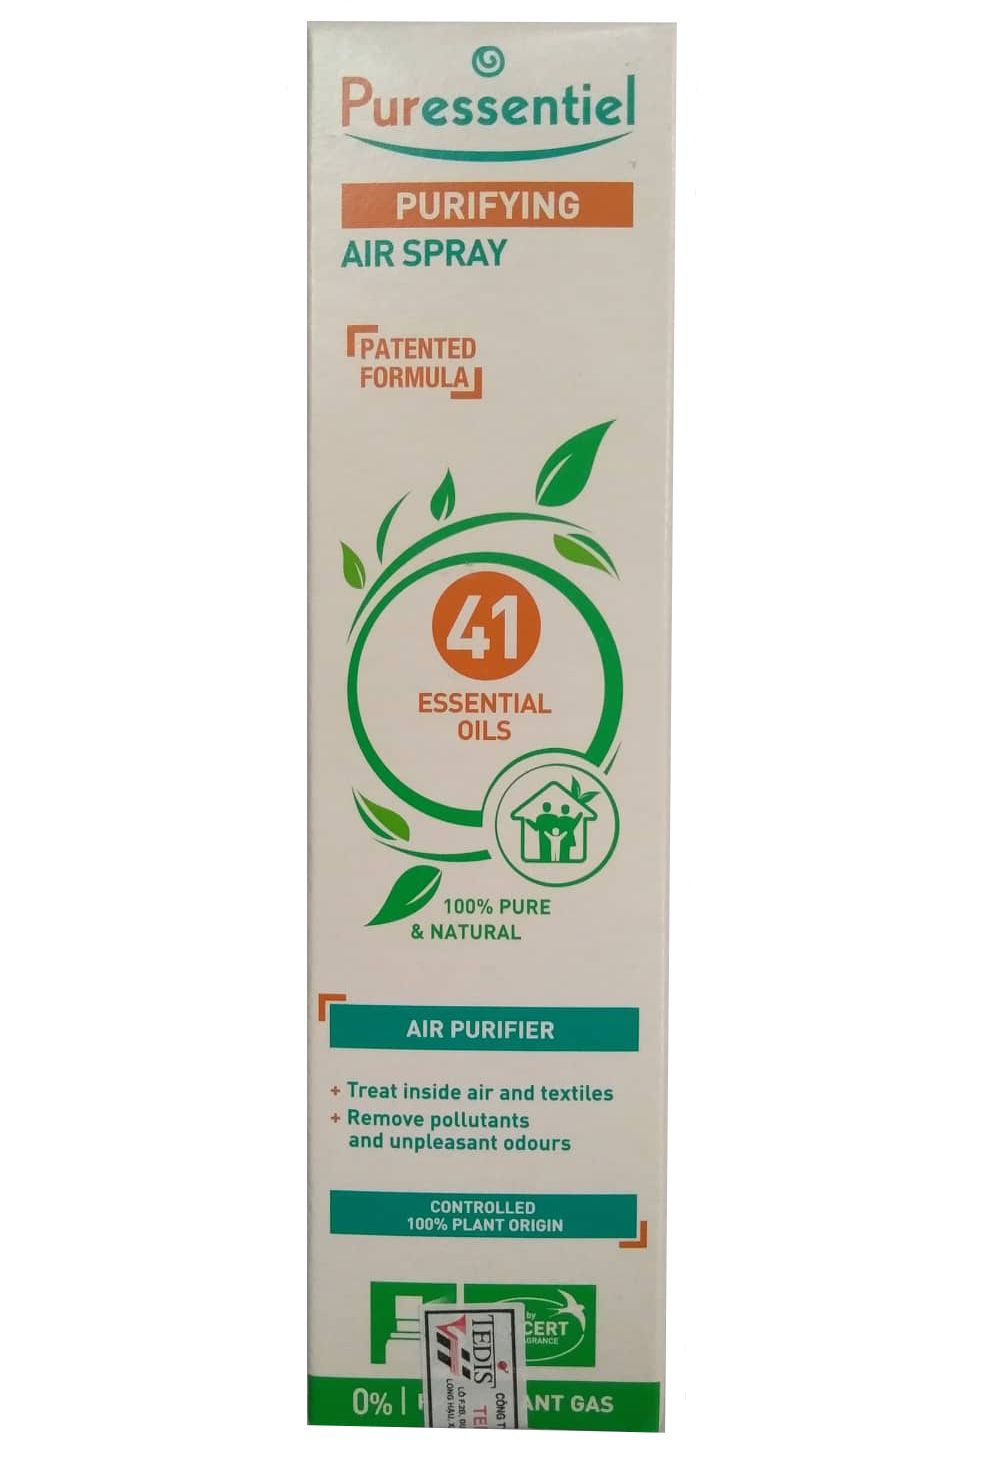 Tinh dầu xịt thơm Puressentiel Purifying Air Spray 